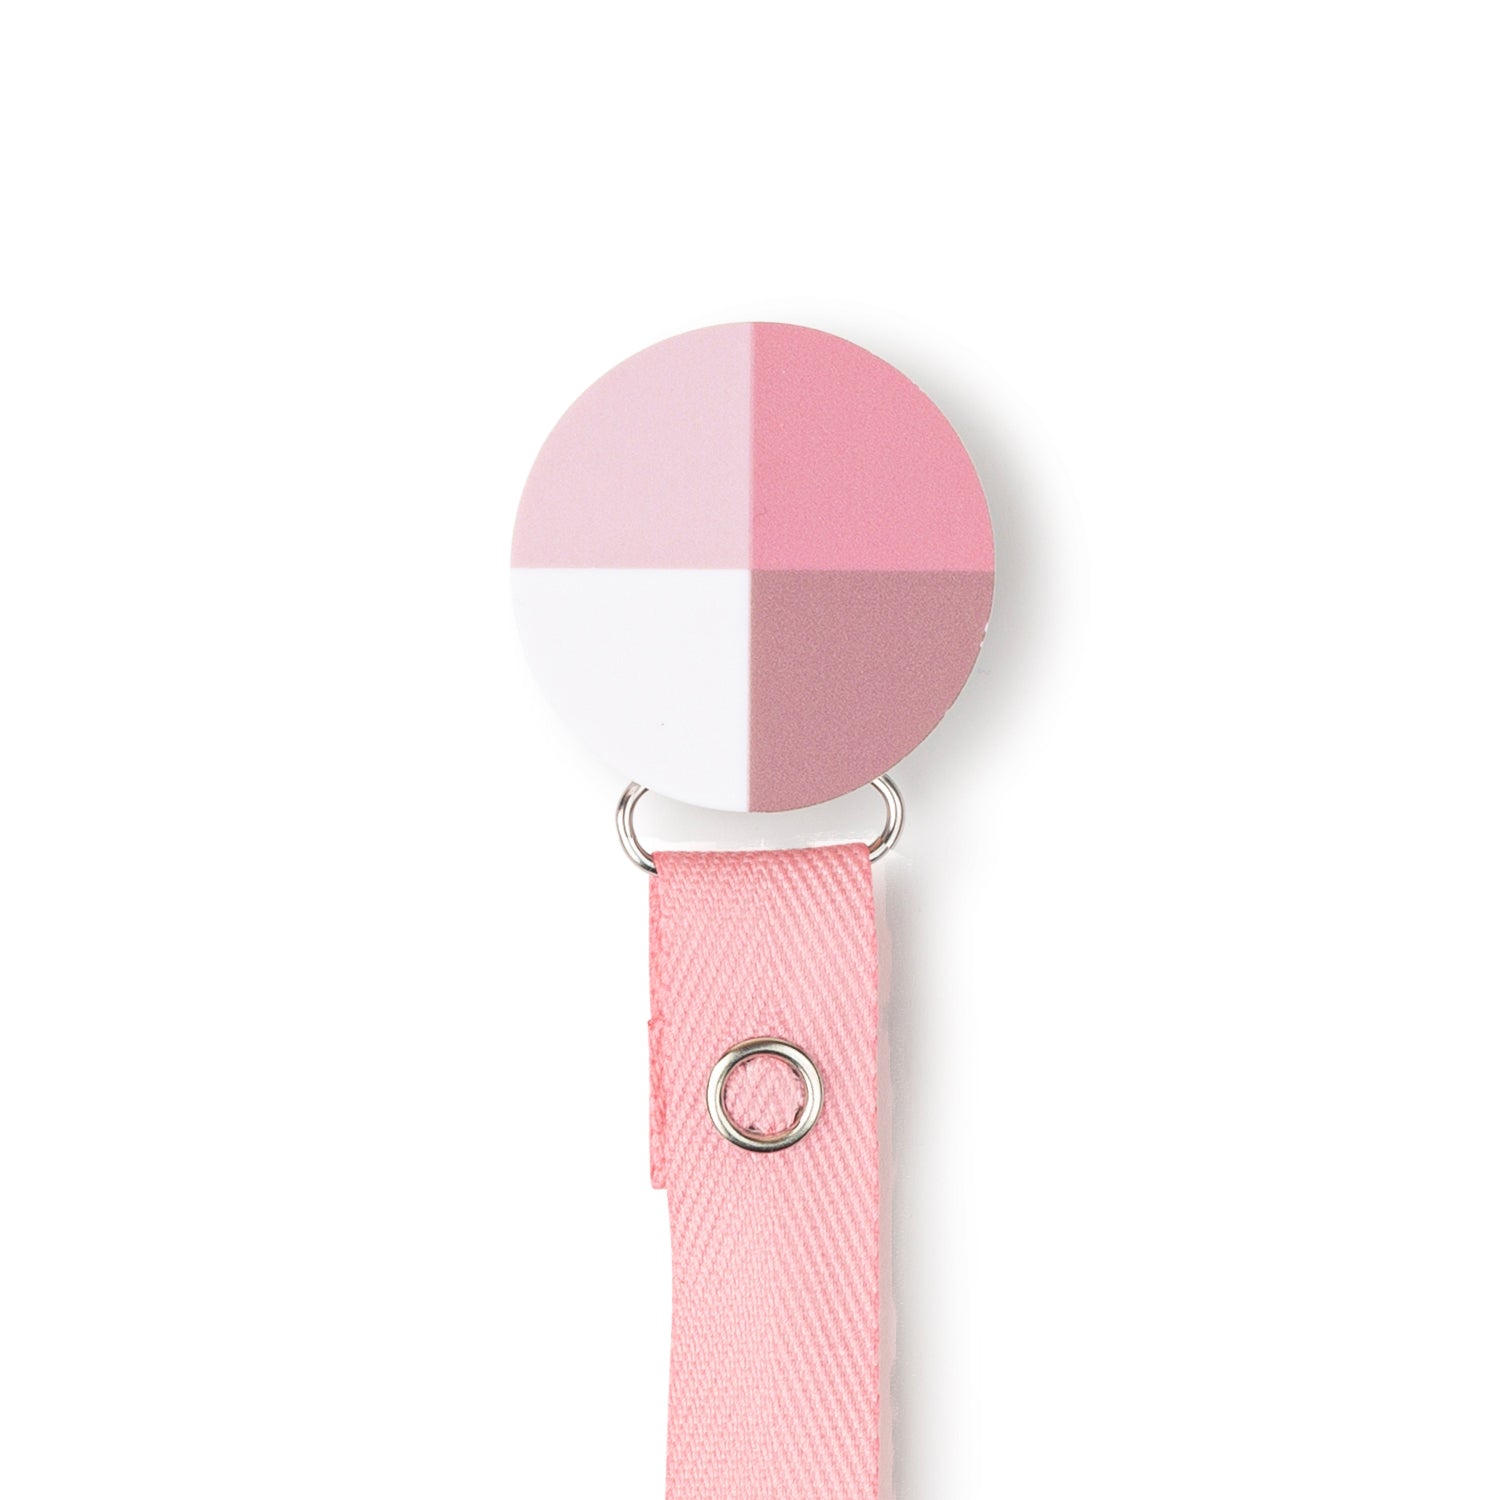 Classy Paci Hues of Pink blush, mauve Colorblock circle pacifier clip